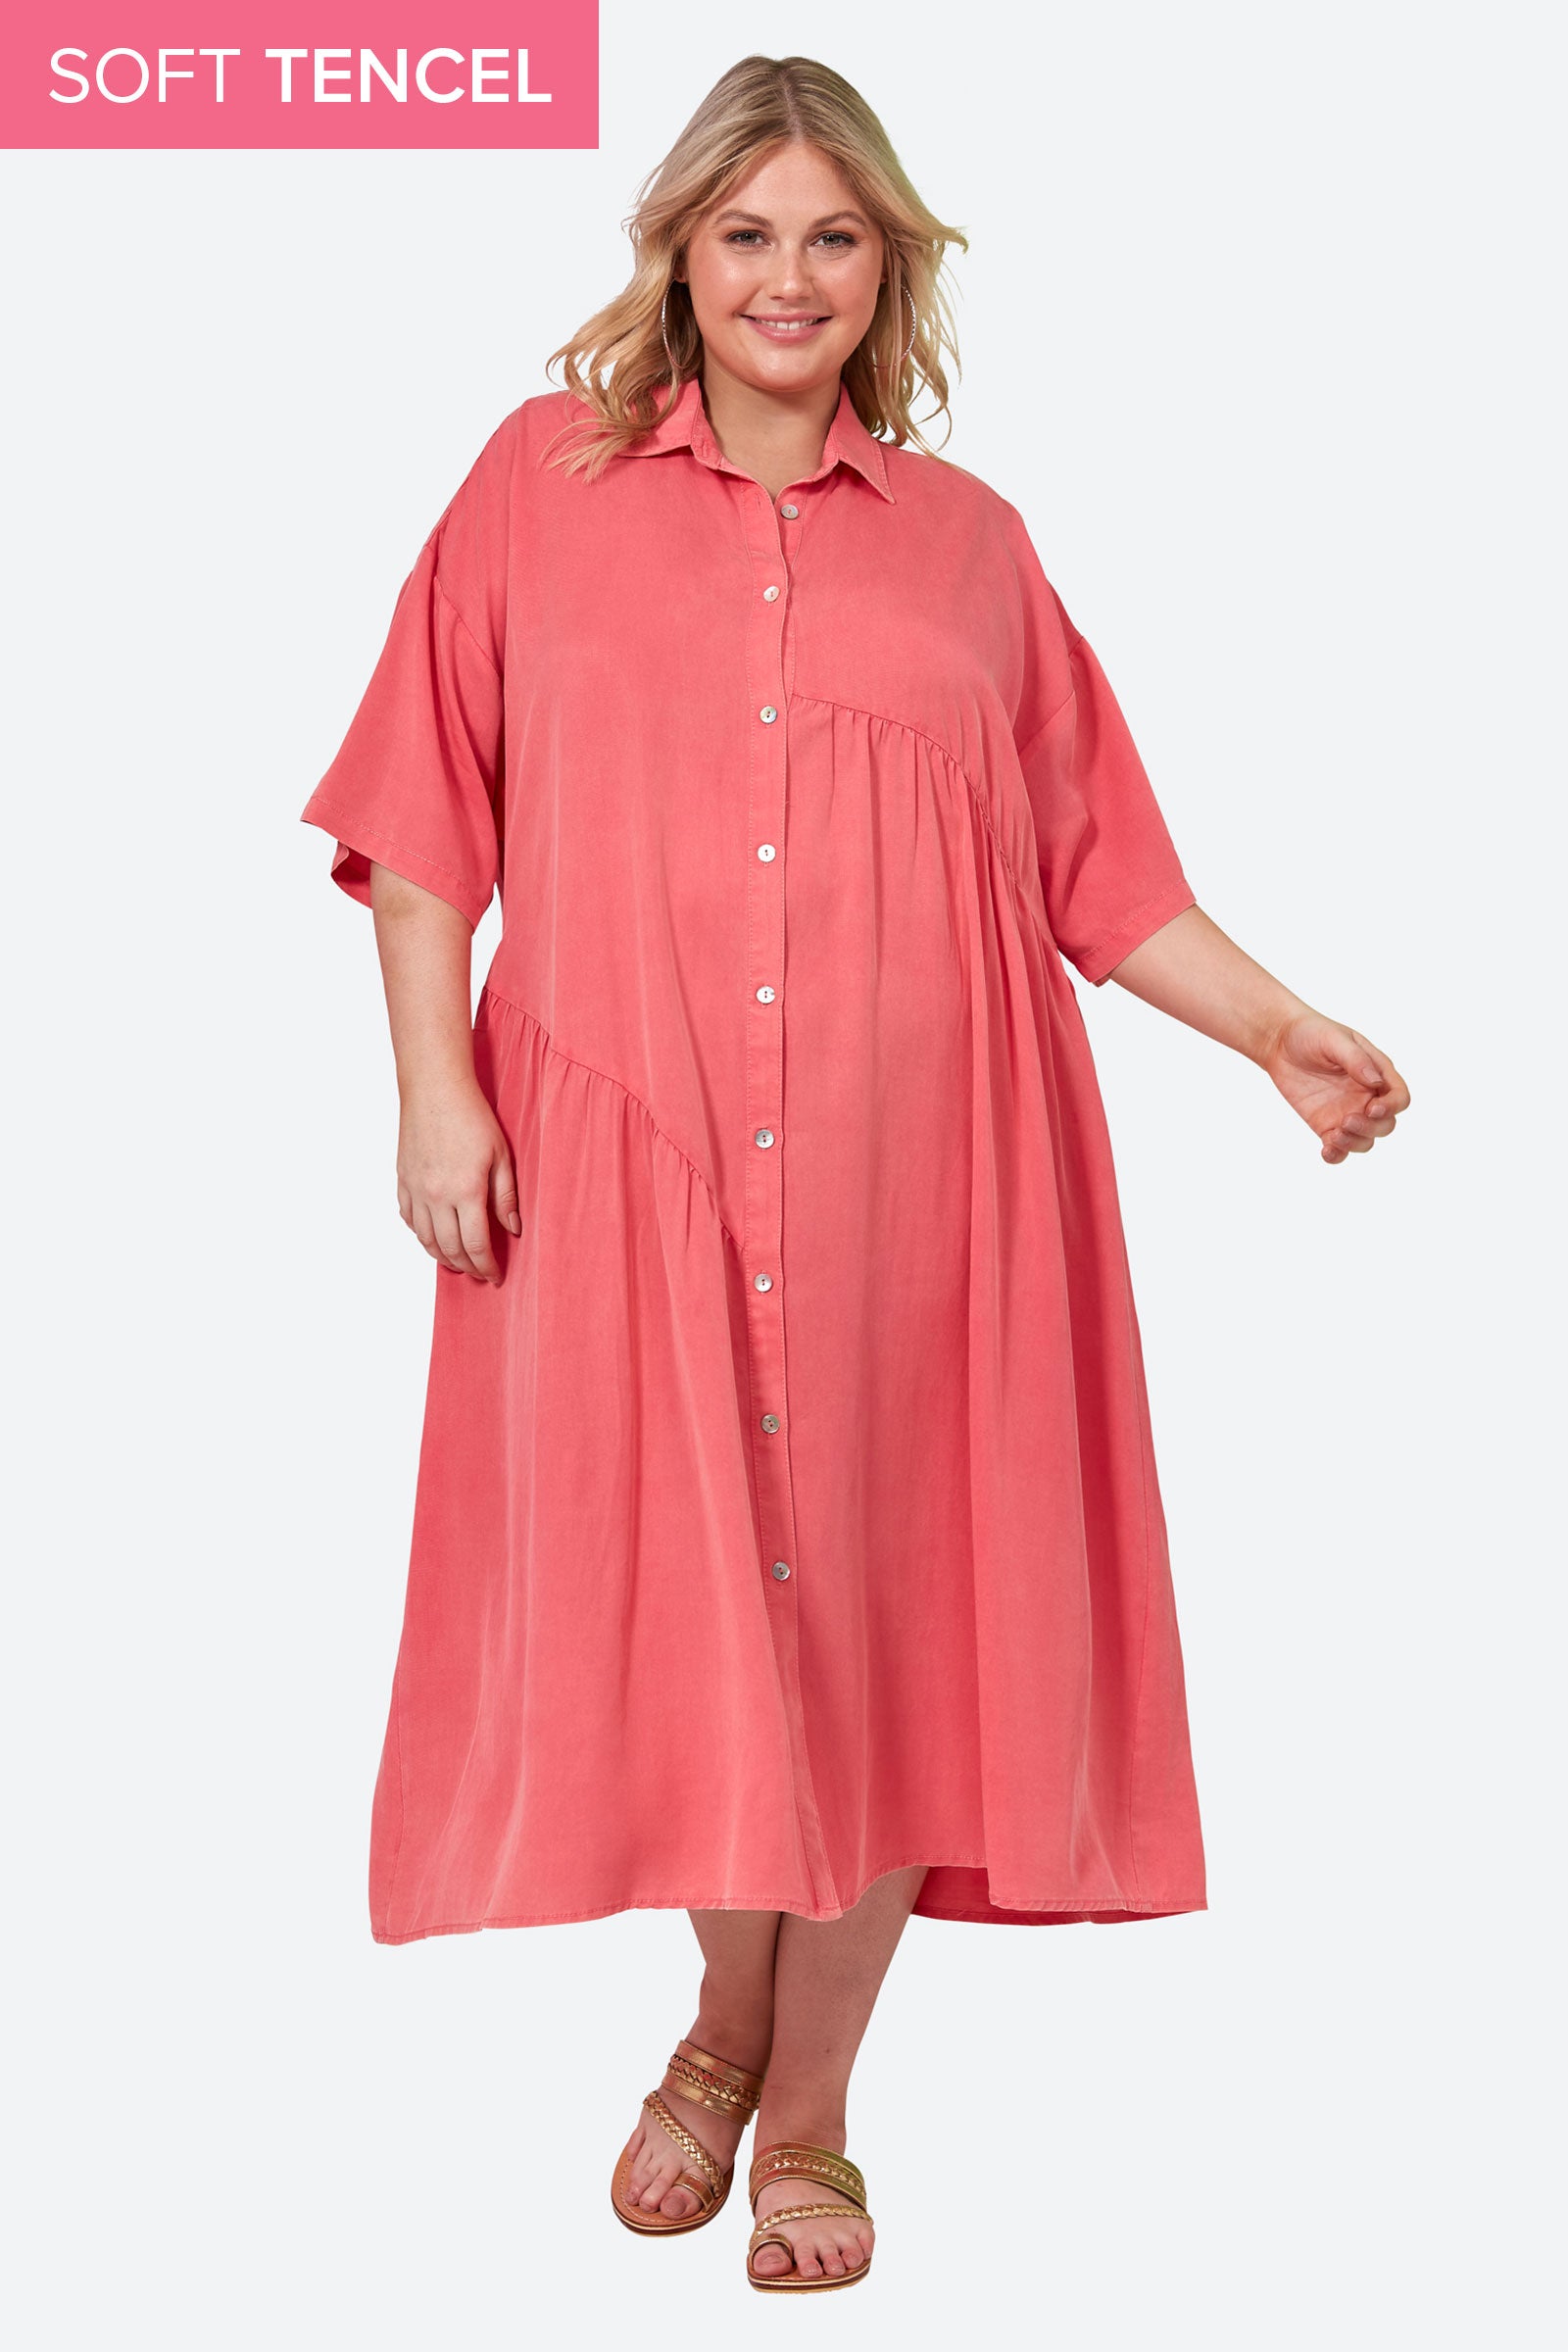 Elan Shirt Dress - Lychee - eb&ive Clothing - Shirt Dress One Size